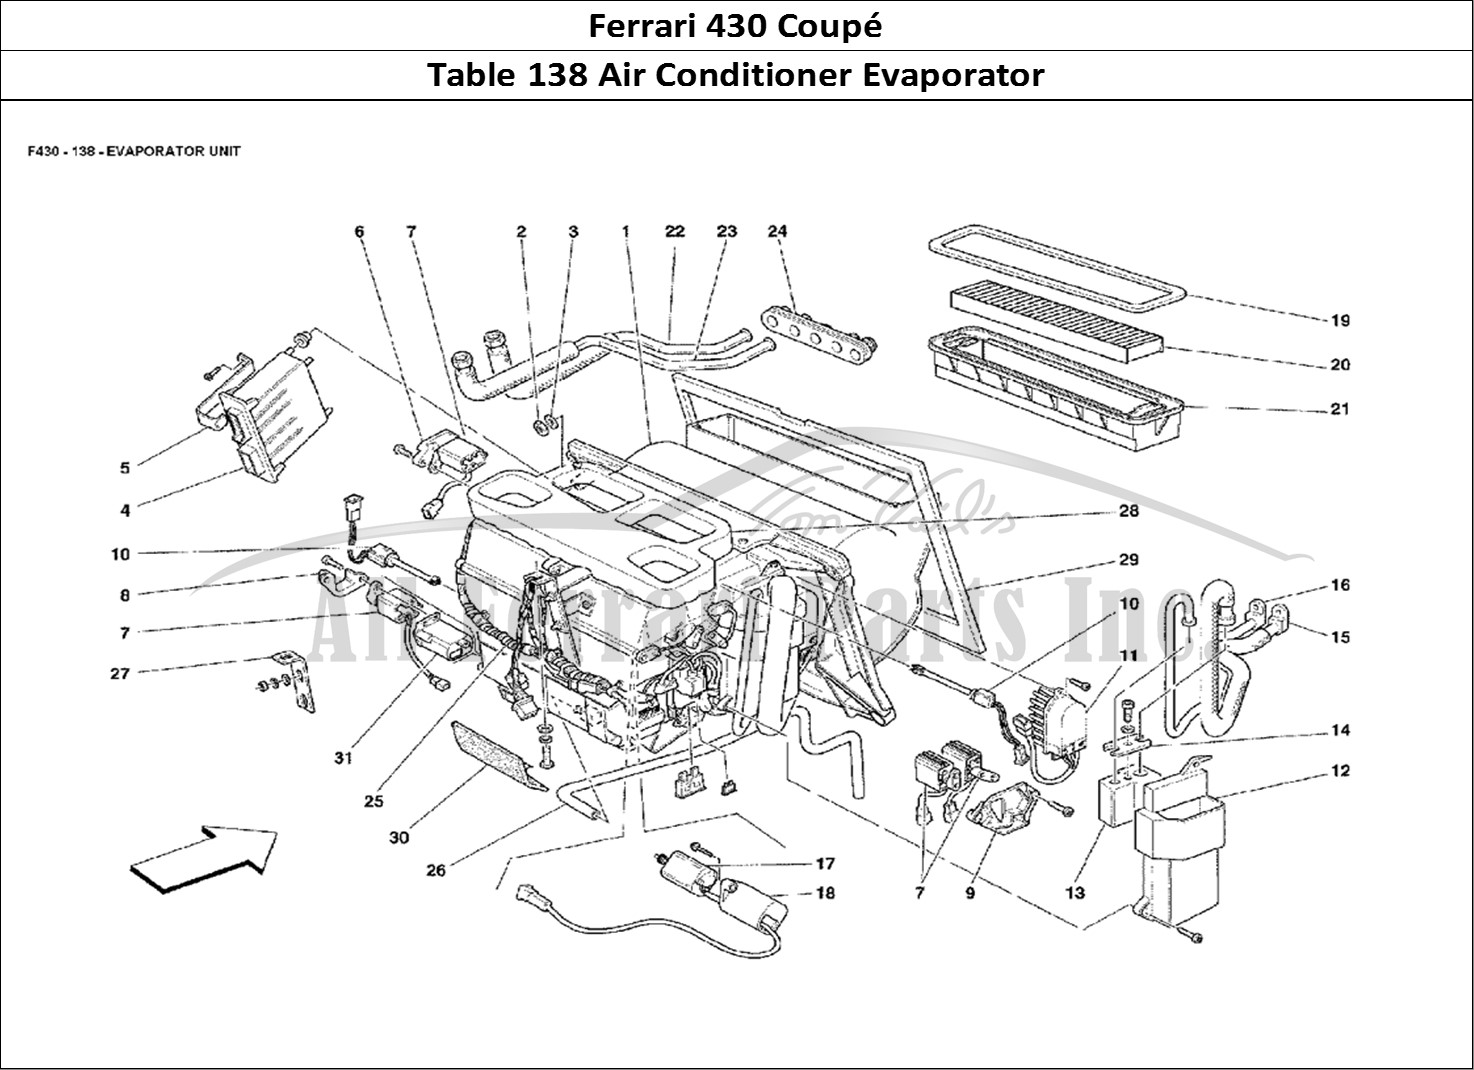 Ferrari Parts Ferrari 430 Coup Page 138 Evaporator Unit